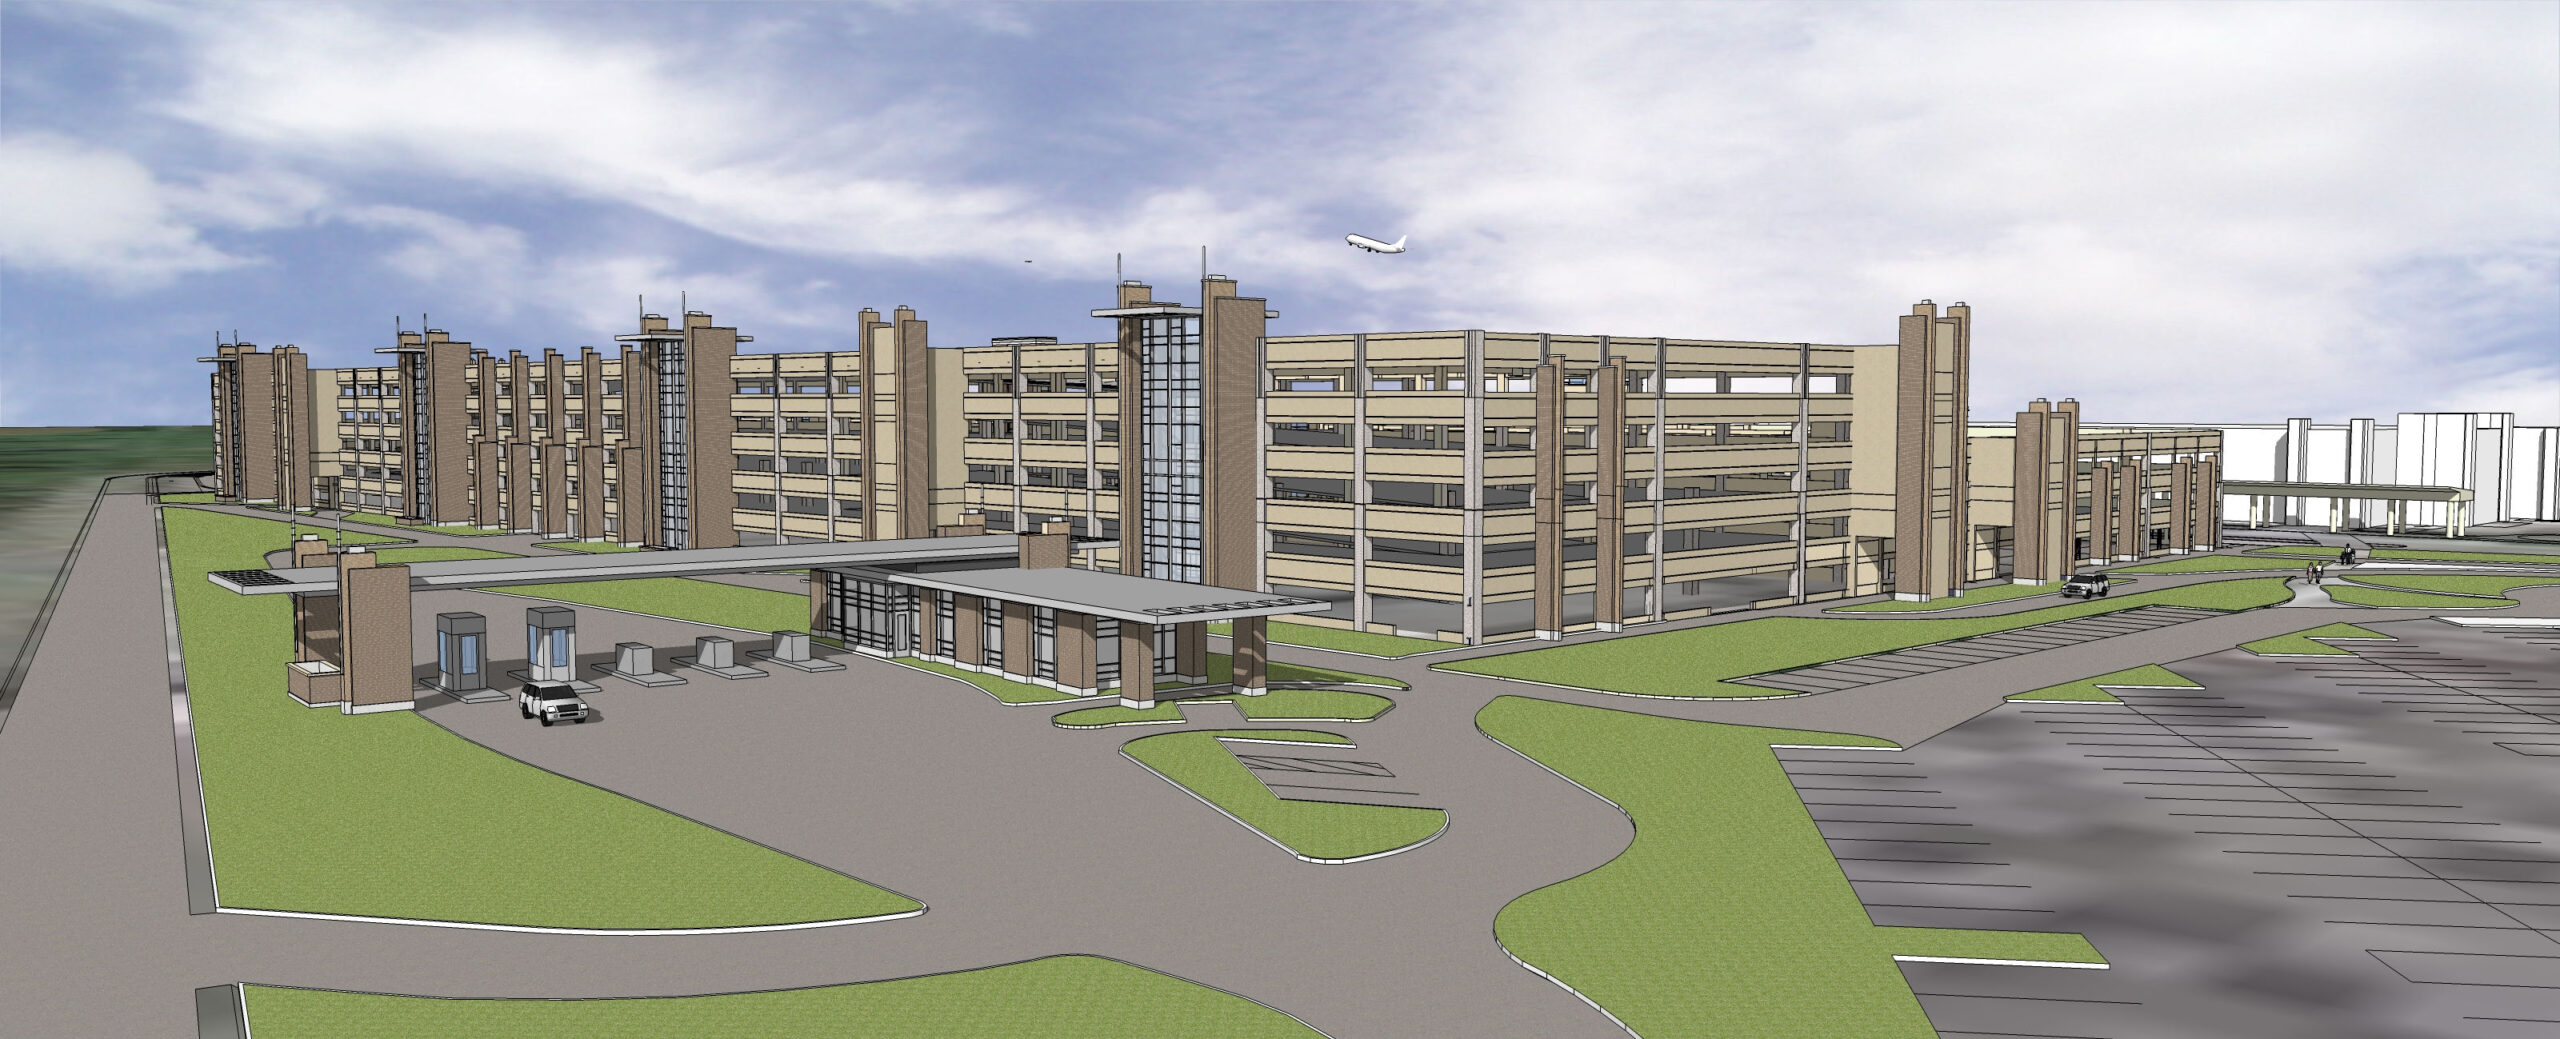 Dane County Regional Airport rendering of new parking garage